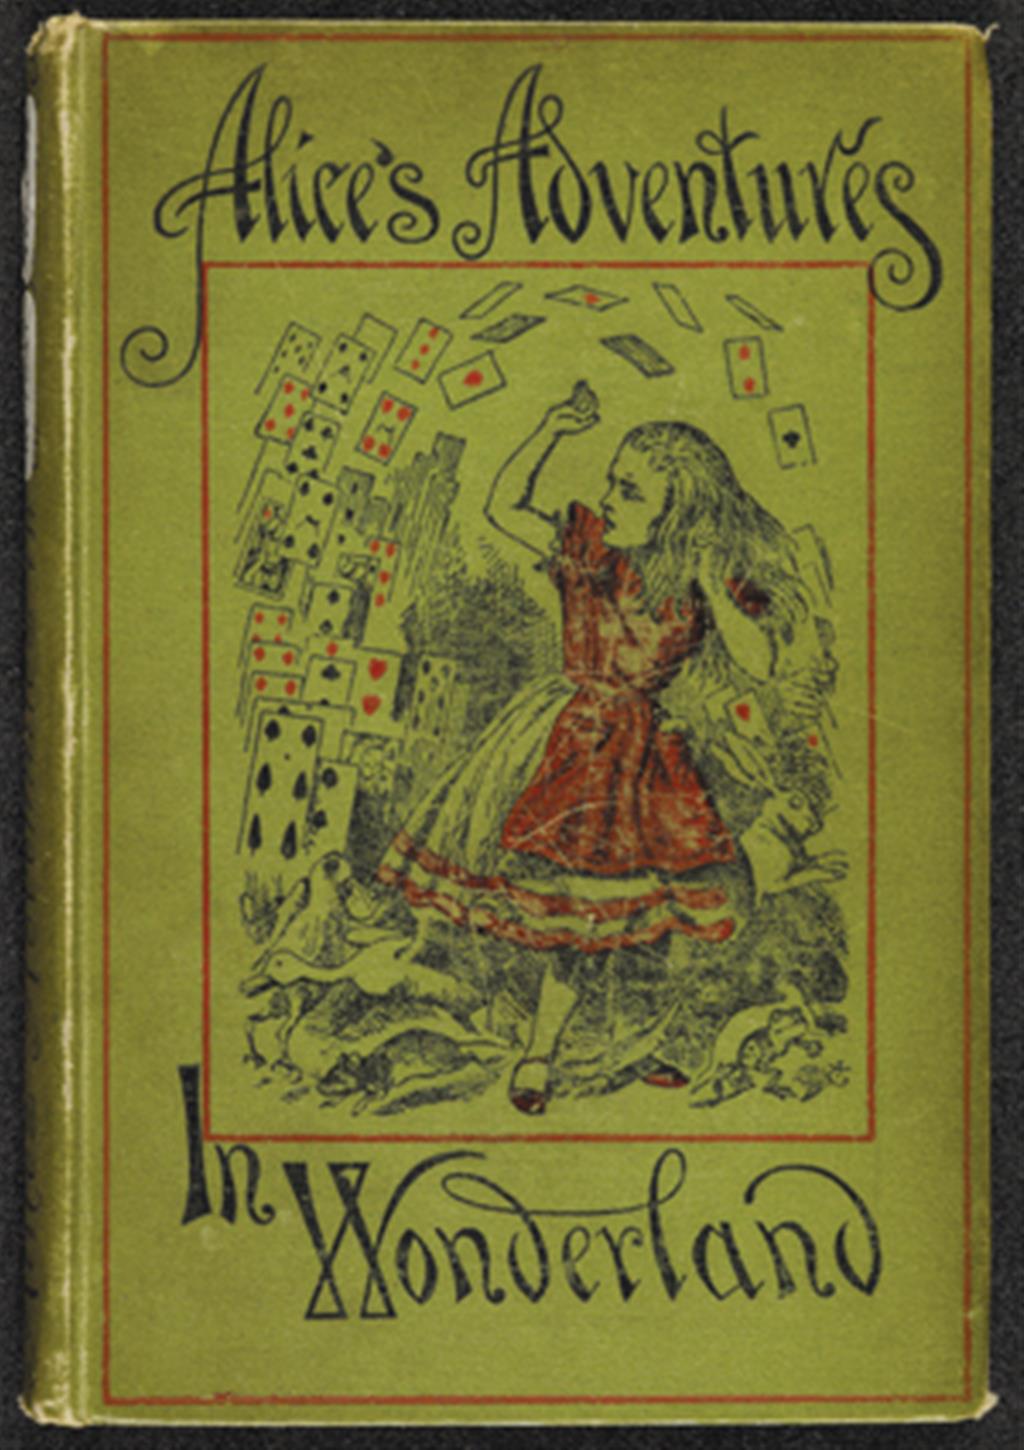 Alice’s Adventures in Wonderland cover image